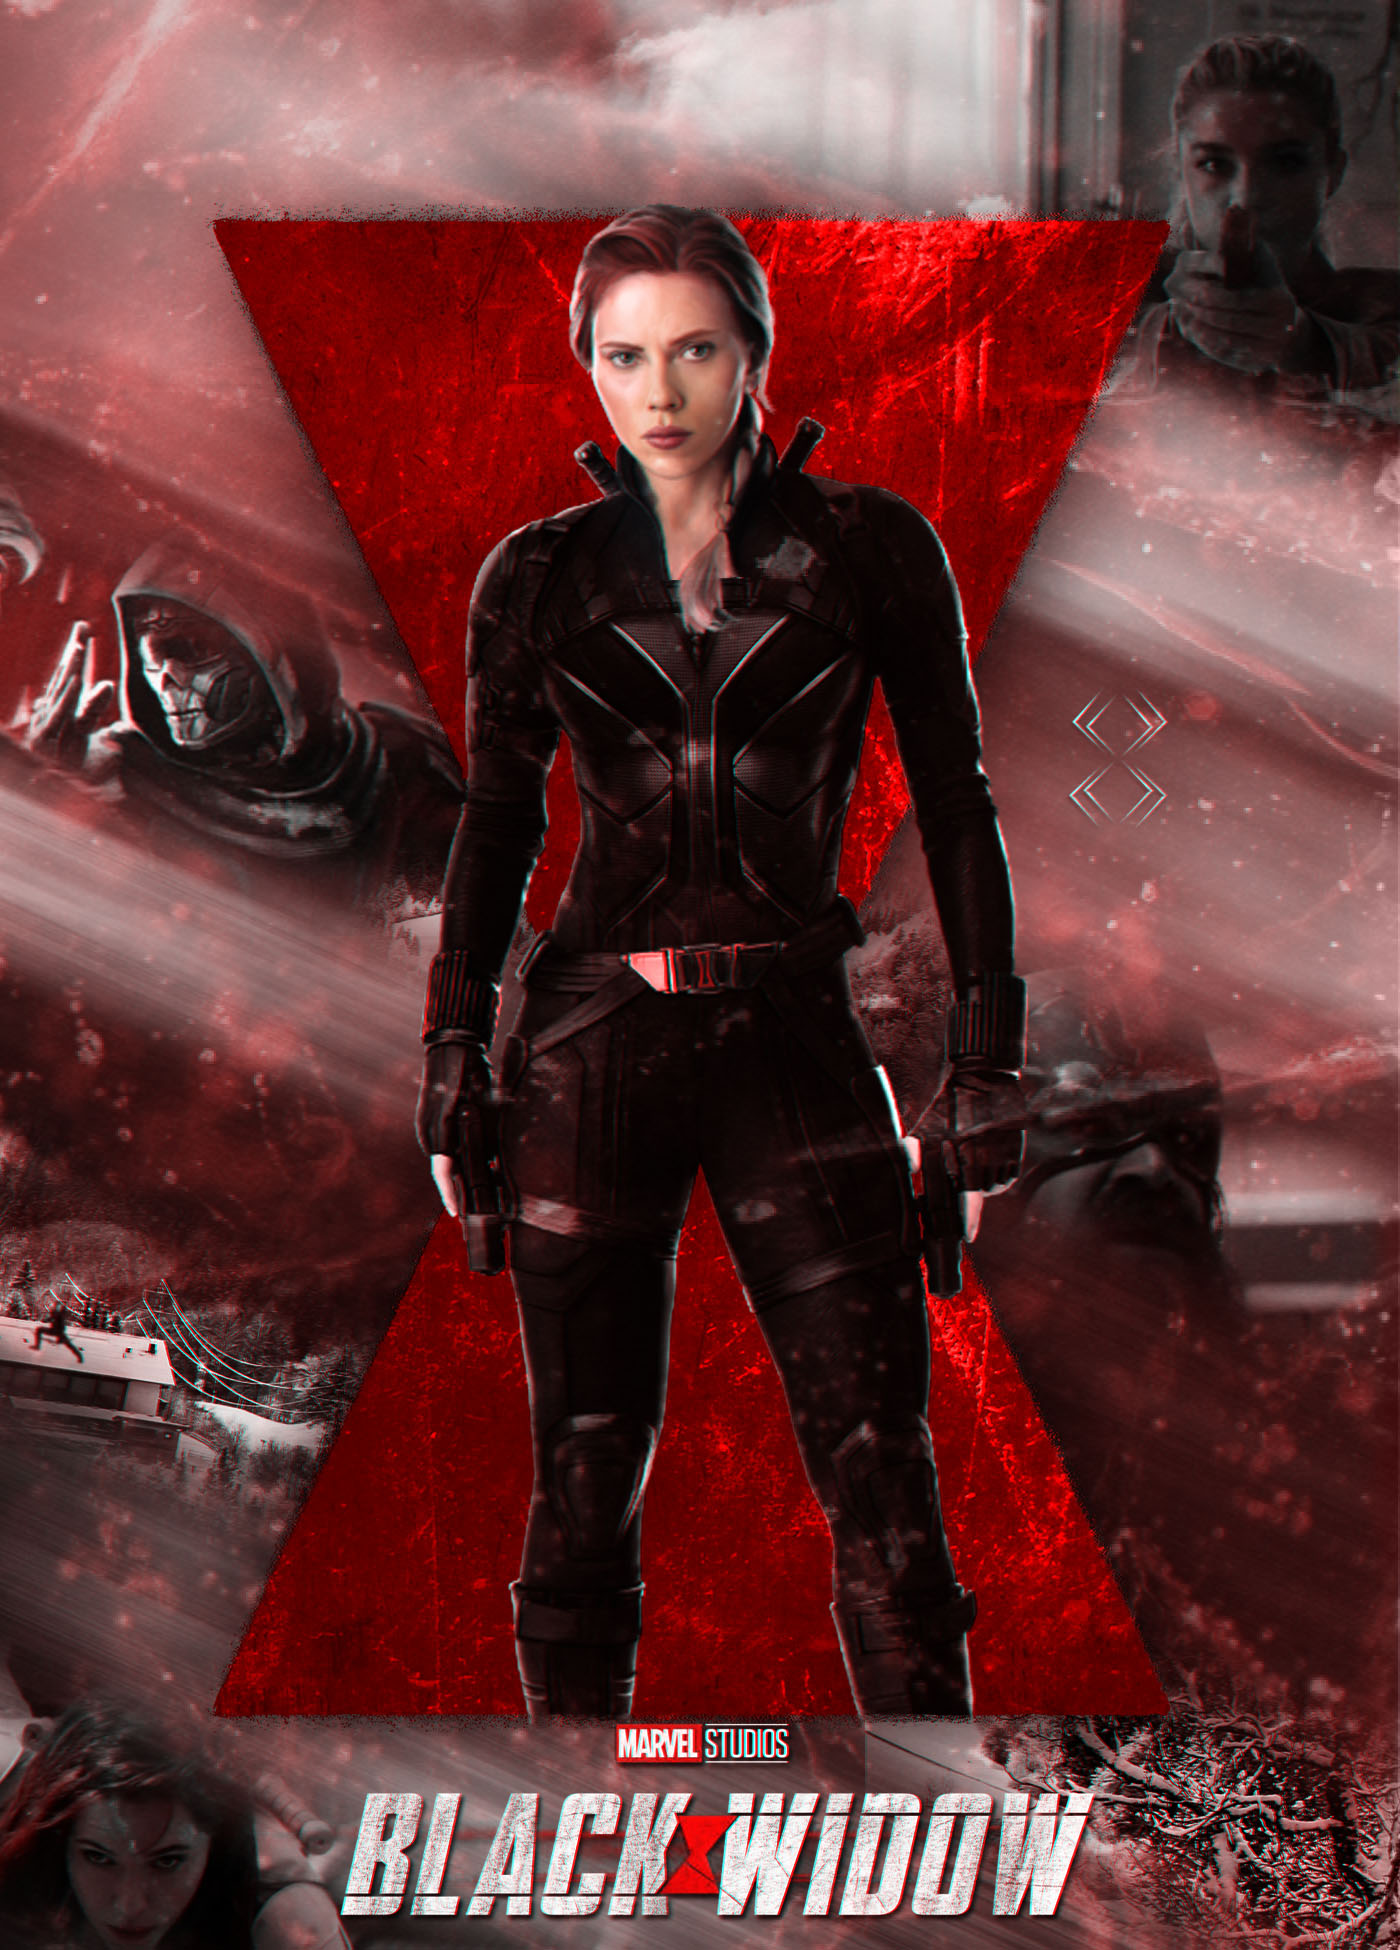 Black Widow - Movie Poster by Chad0Wick on DeviantArt